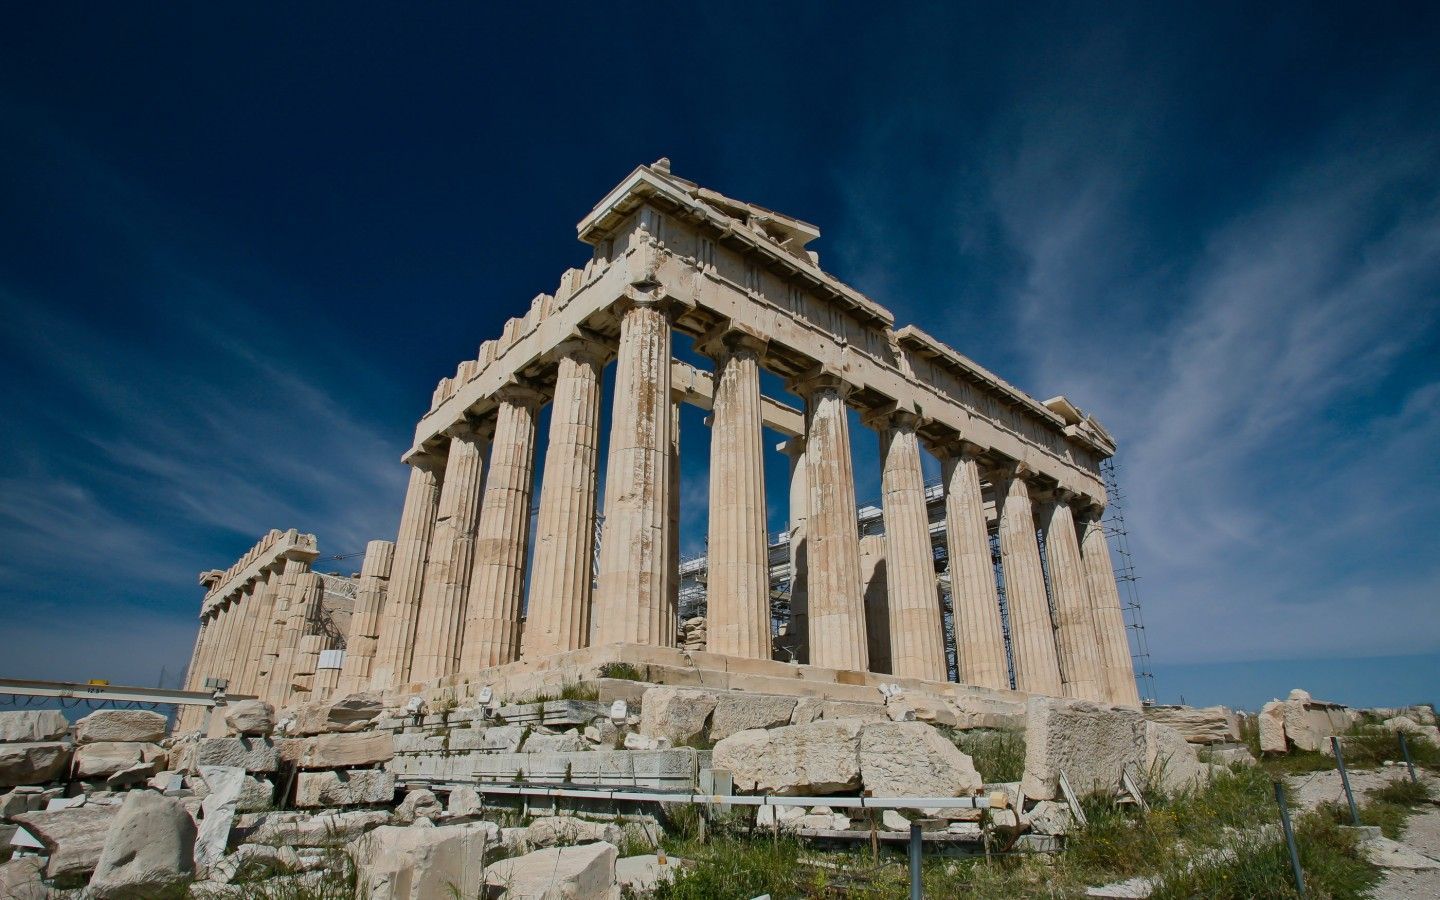 تصویر شکیل معبد پارتنون در یونان مناسب زمینه لپ‌تاپ و کامپیوتر